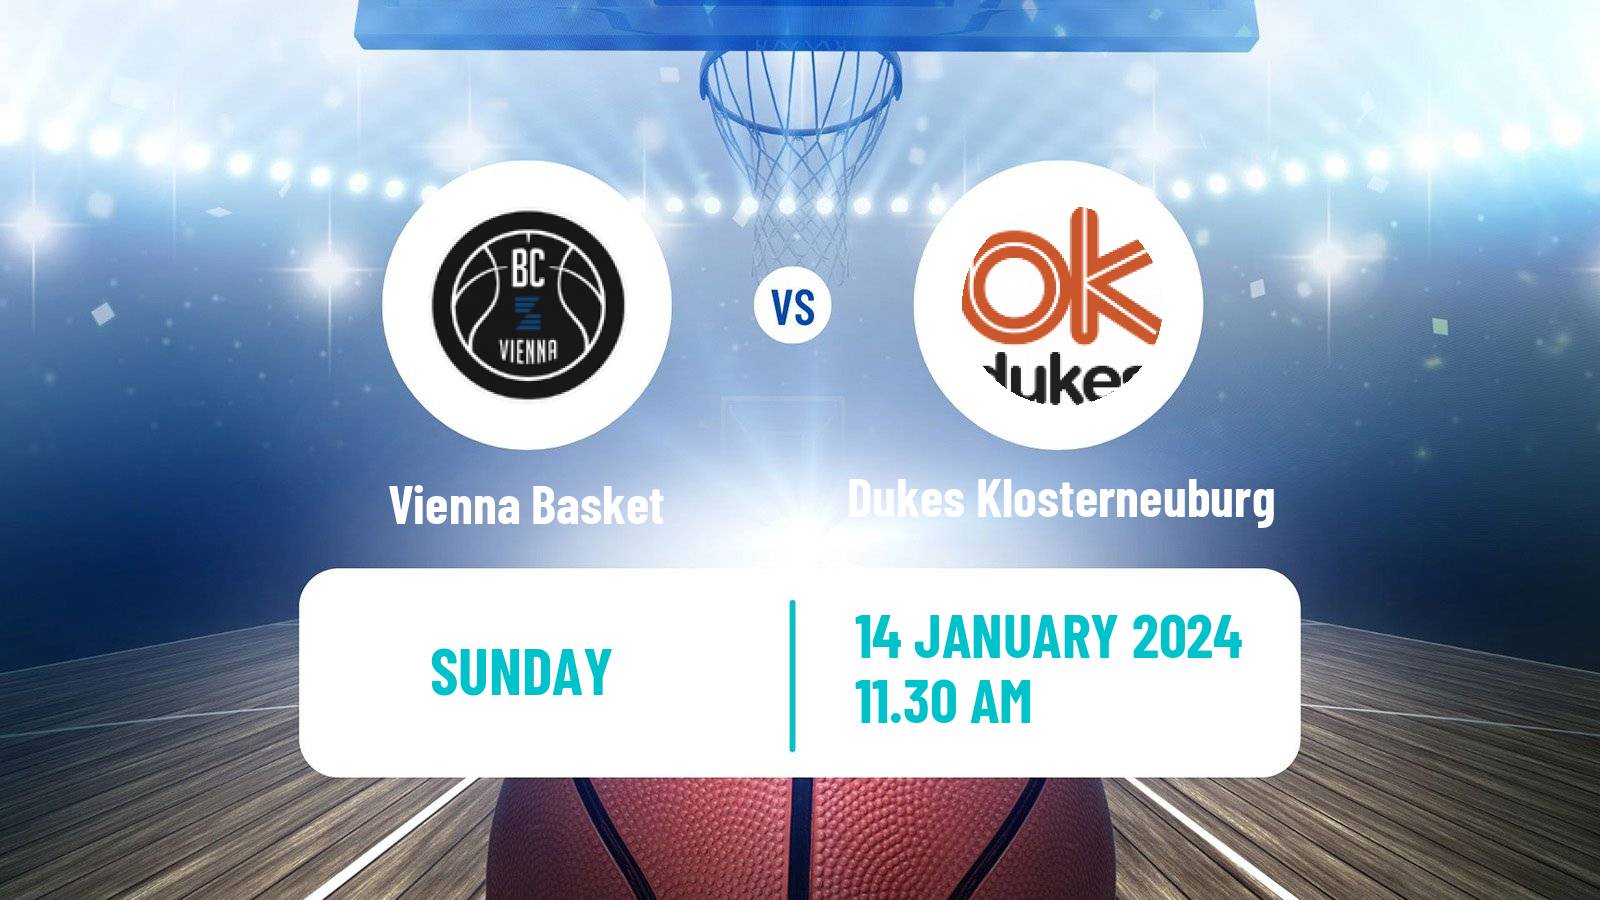 Basketball Austrian Superliga Basketball Vienna Basket - Dukes Klosterneuburg